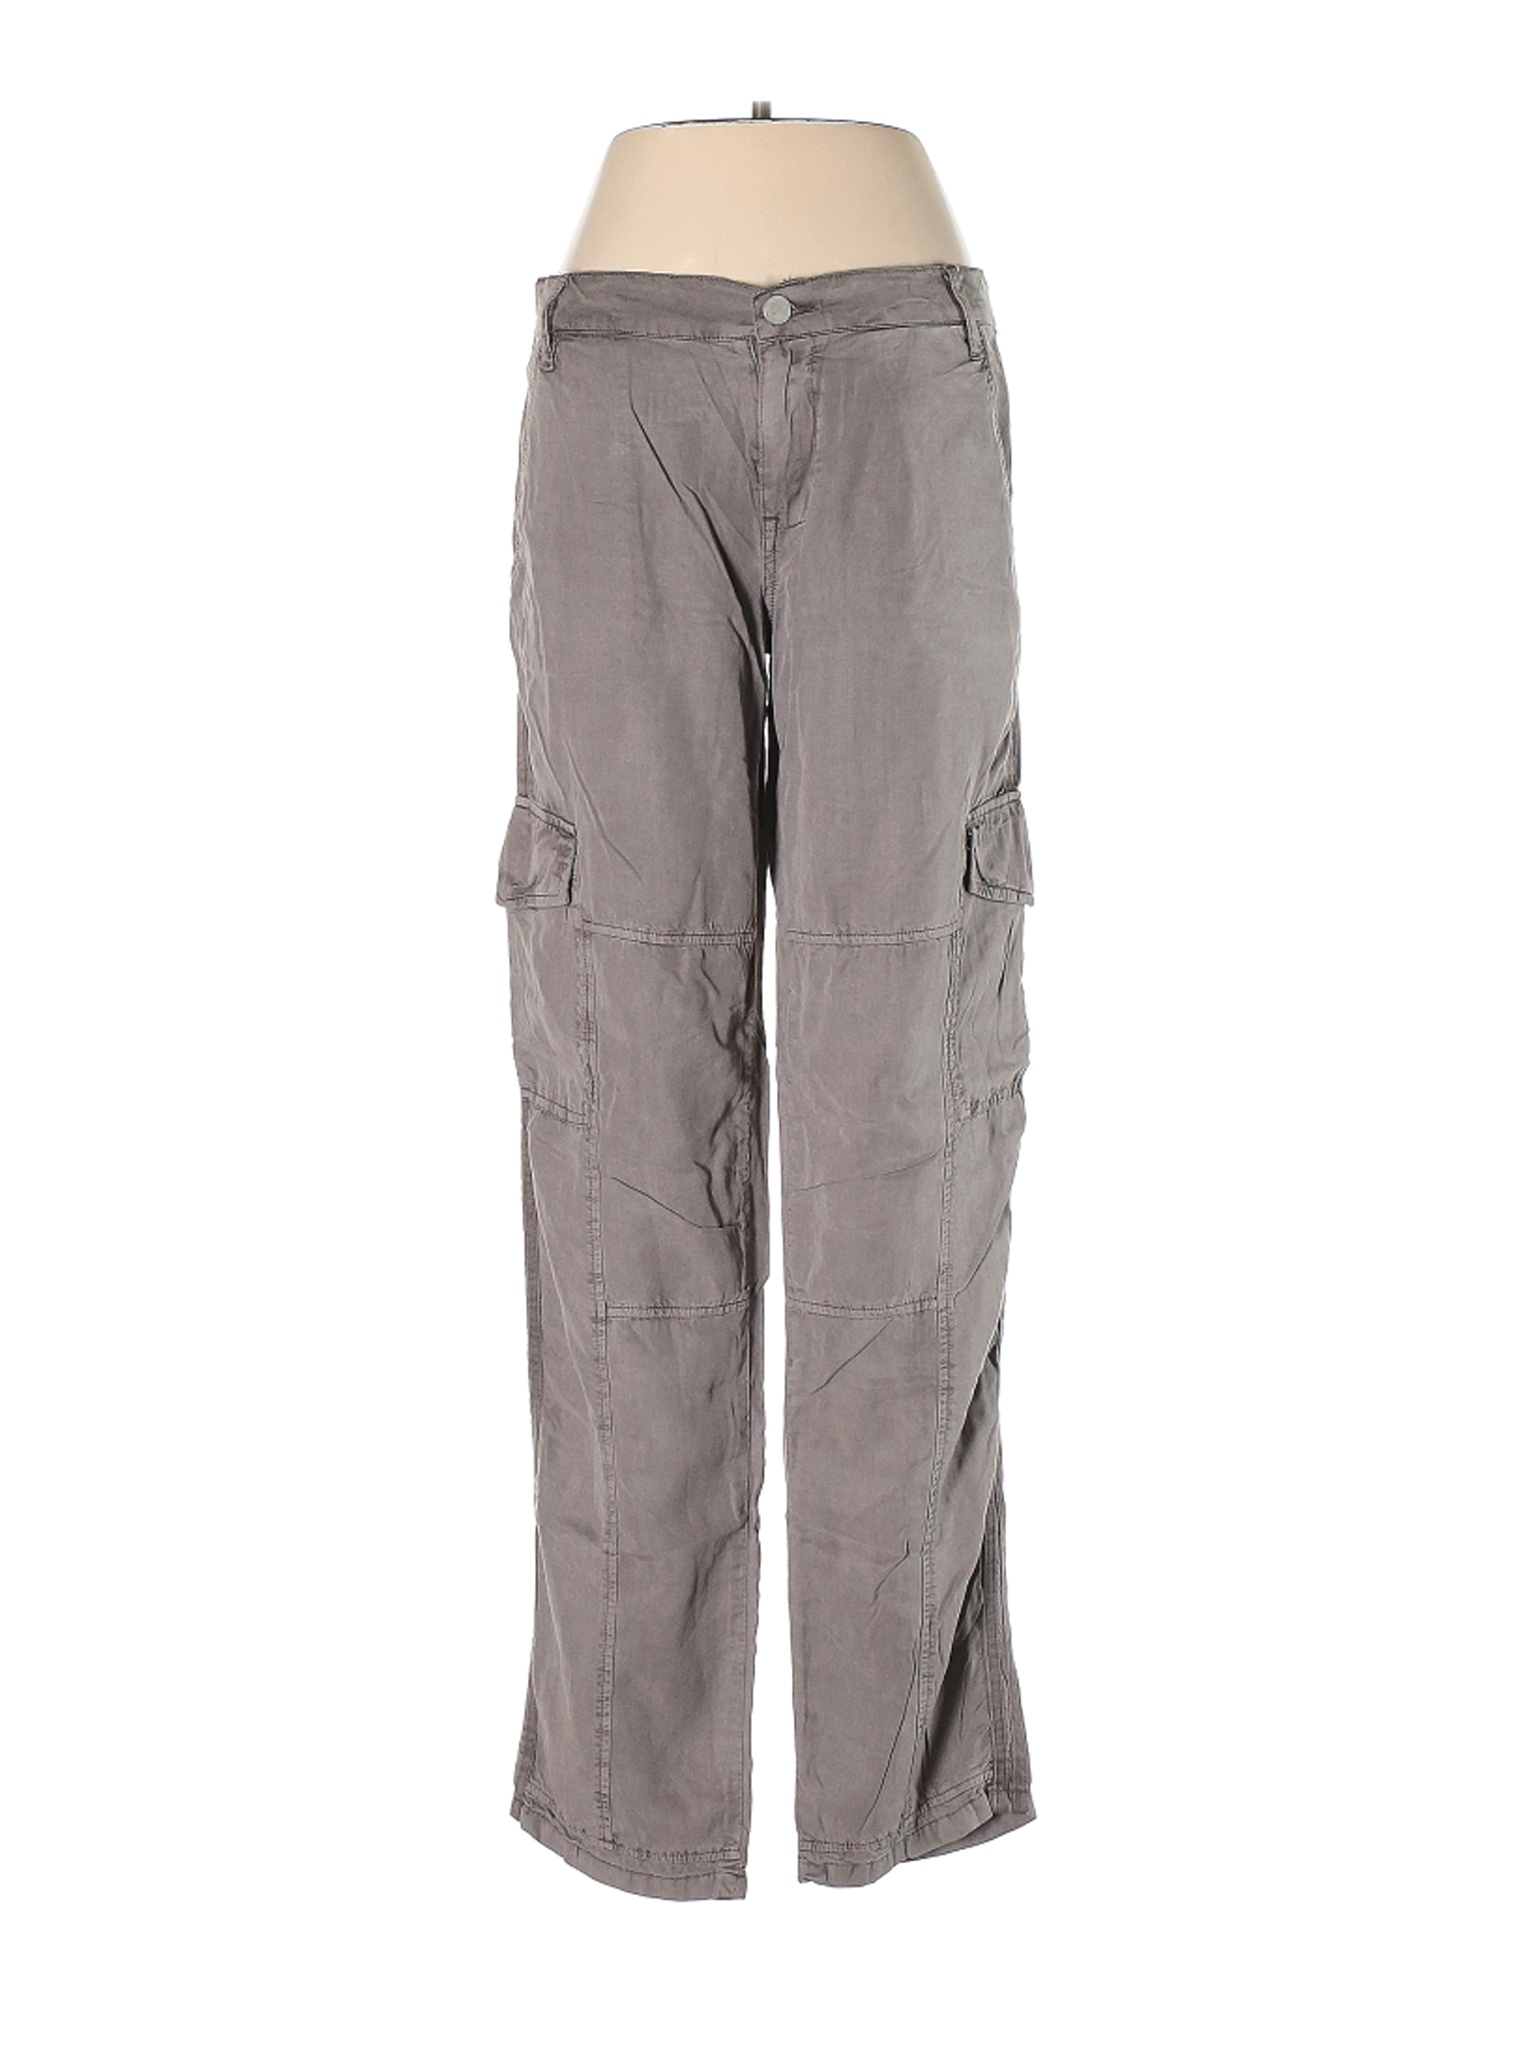 Blank NYC Women Gray Cargo Pants 26W | eBay